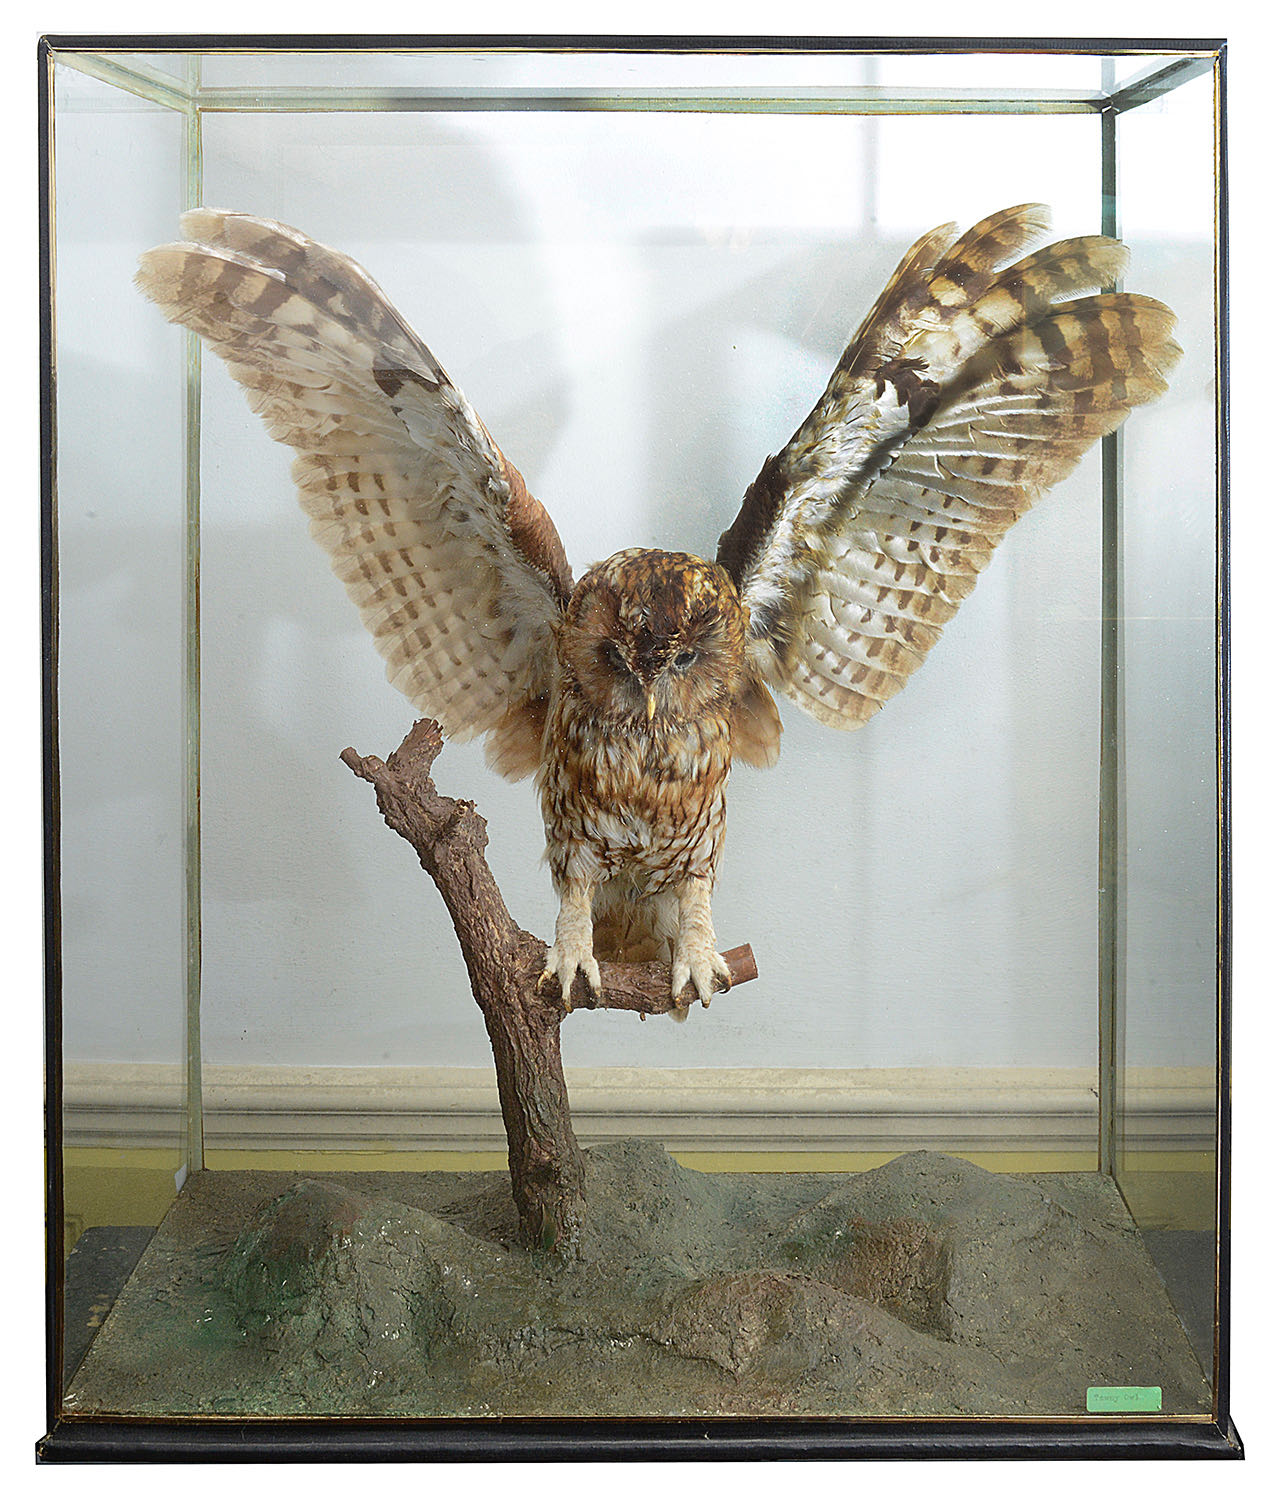 Taxidermy: An early 20th century tawny owl